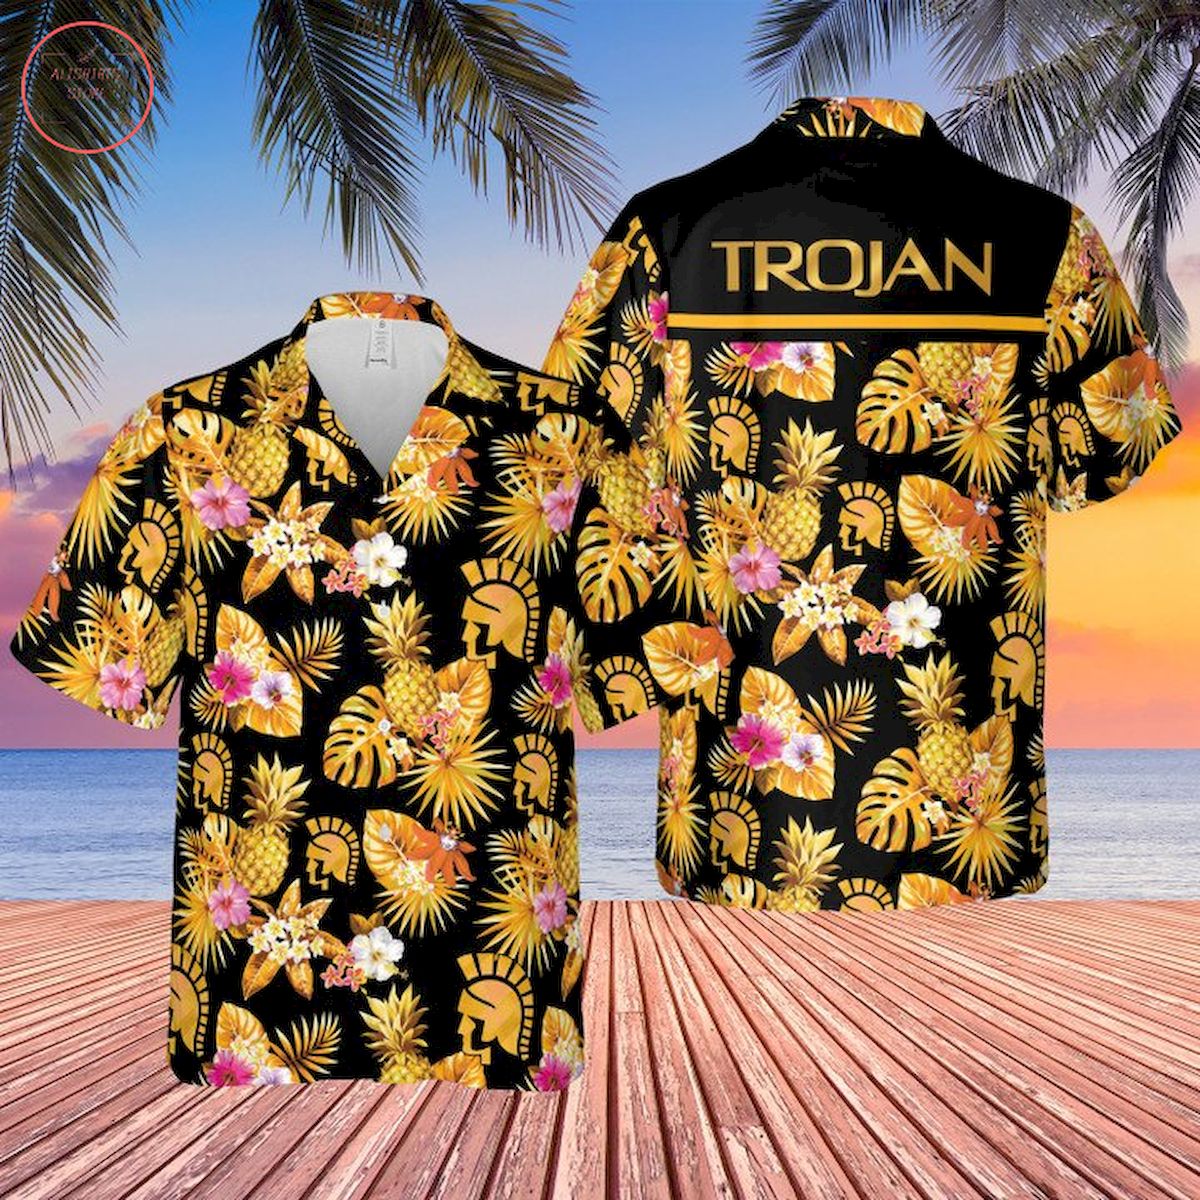 Trojan Condoms Hawaiian Shirt and Shorts